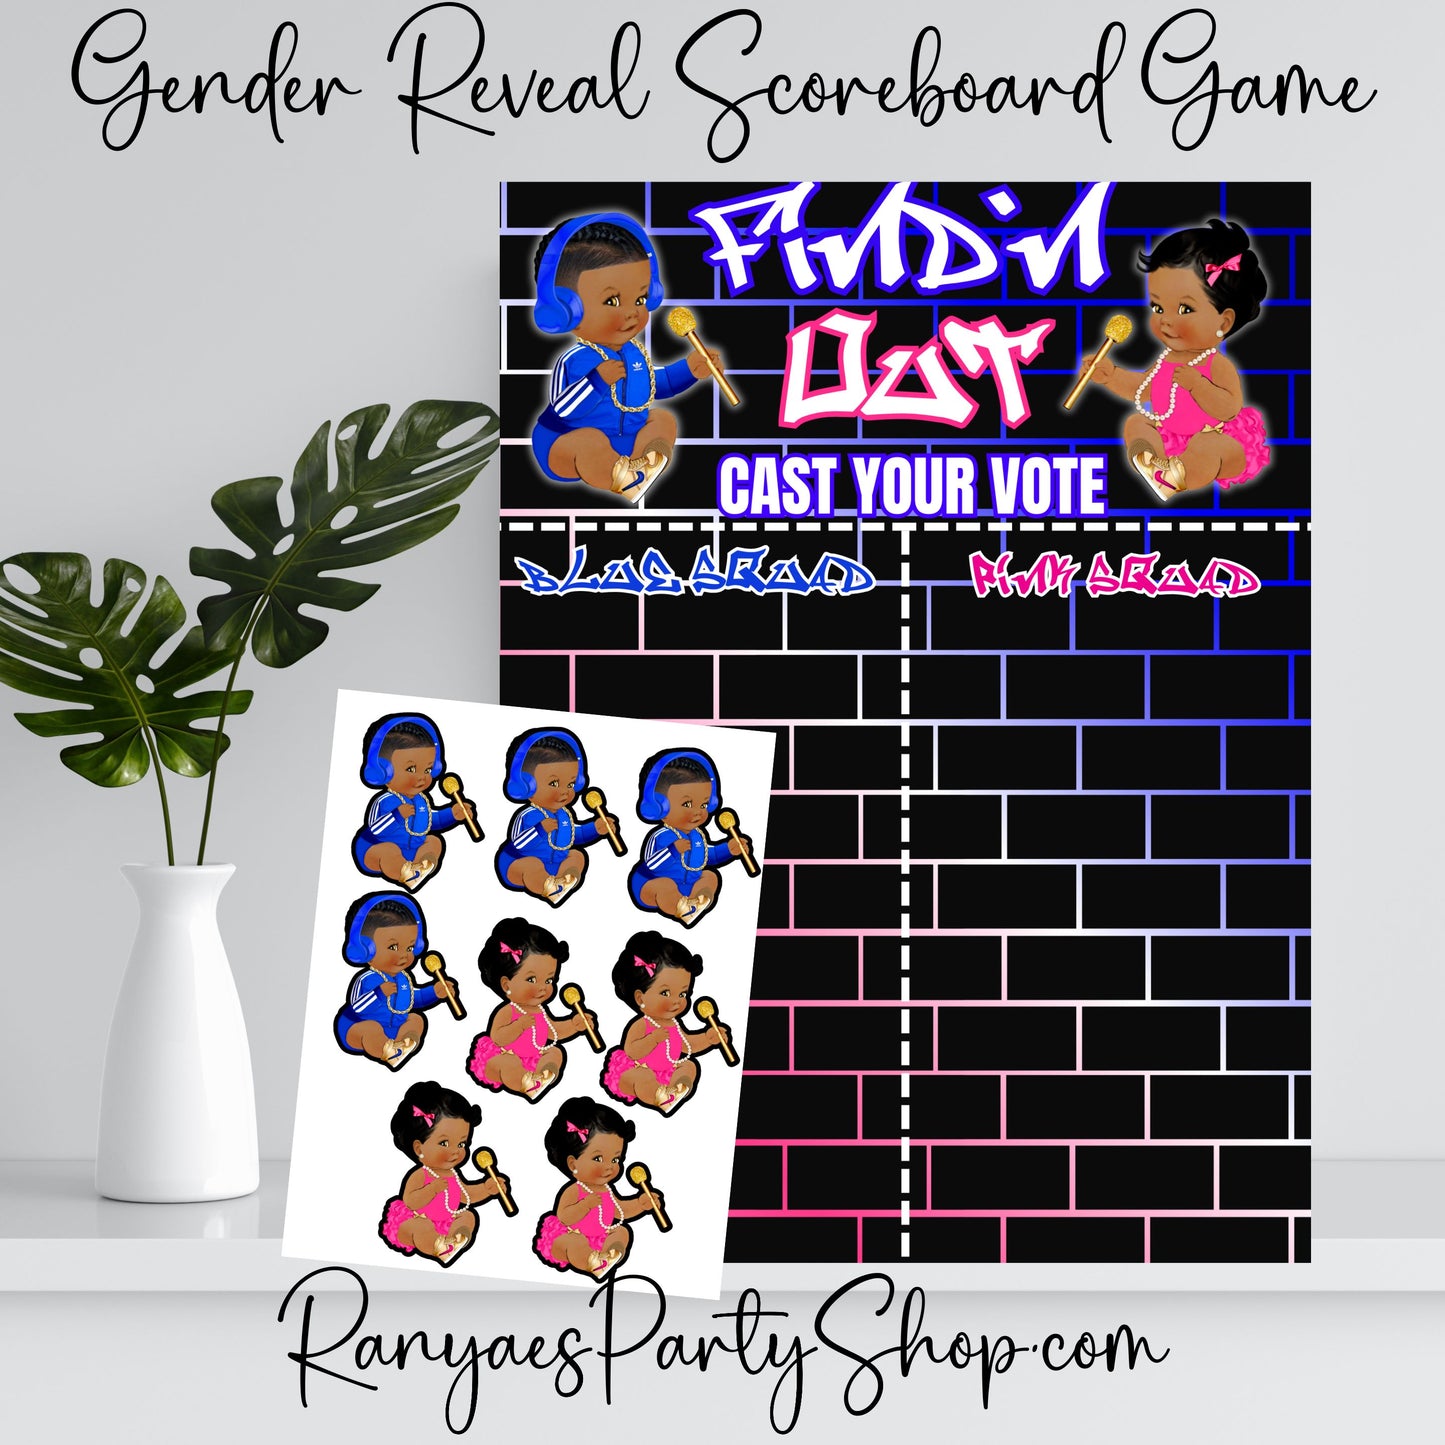 Find'N Out Gender Reveal Scoreboard | Gender Reveal Games | 18x24 Poster Size | Instant Download